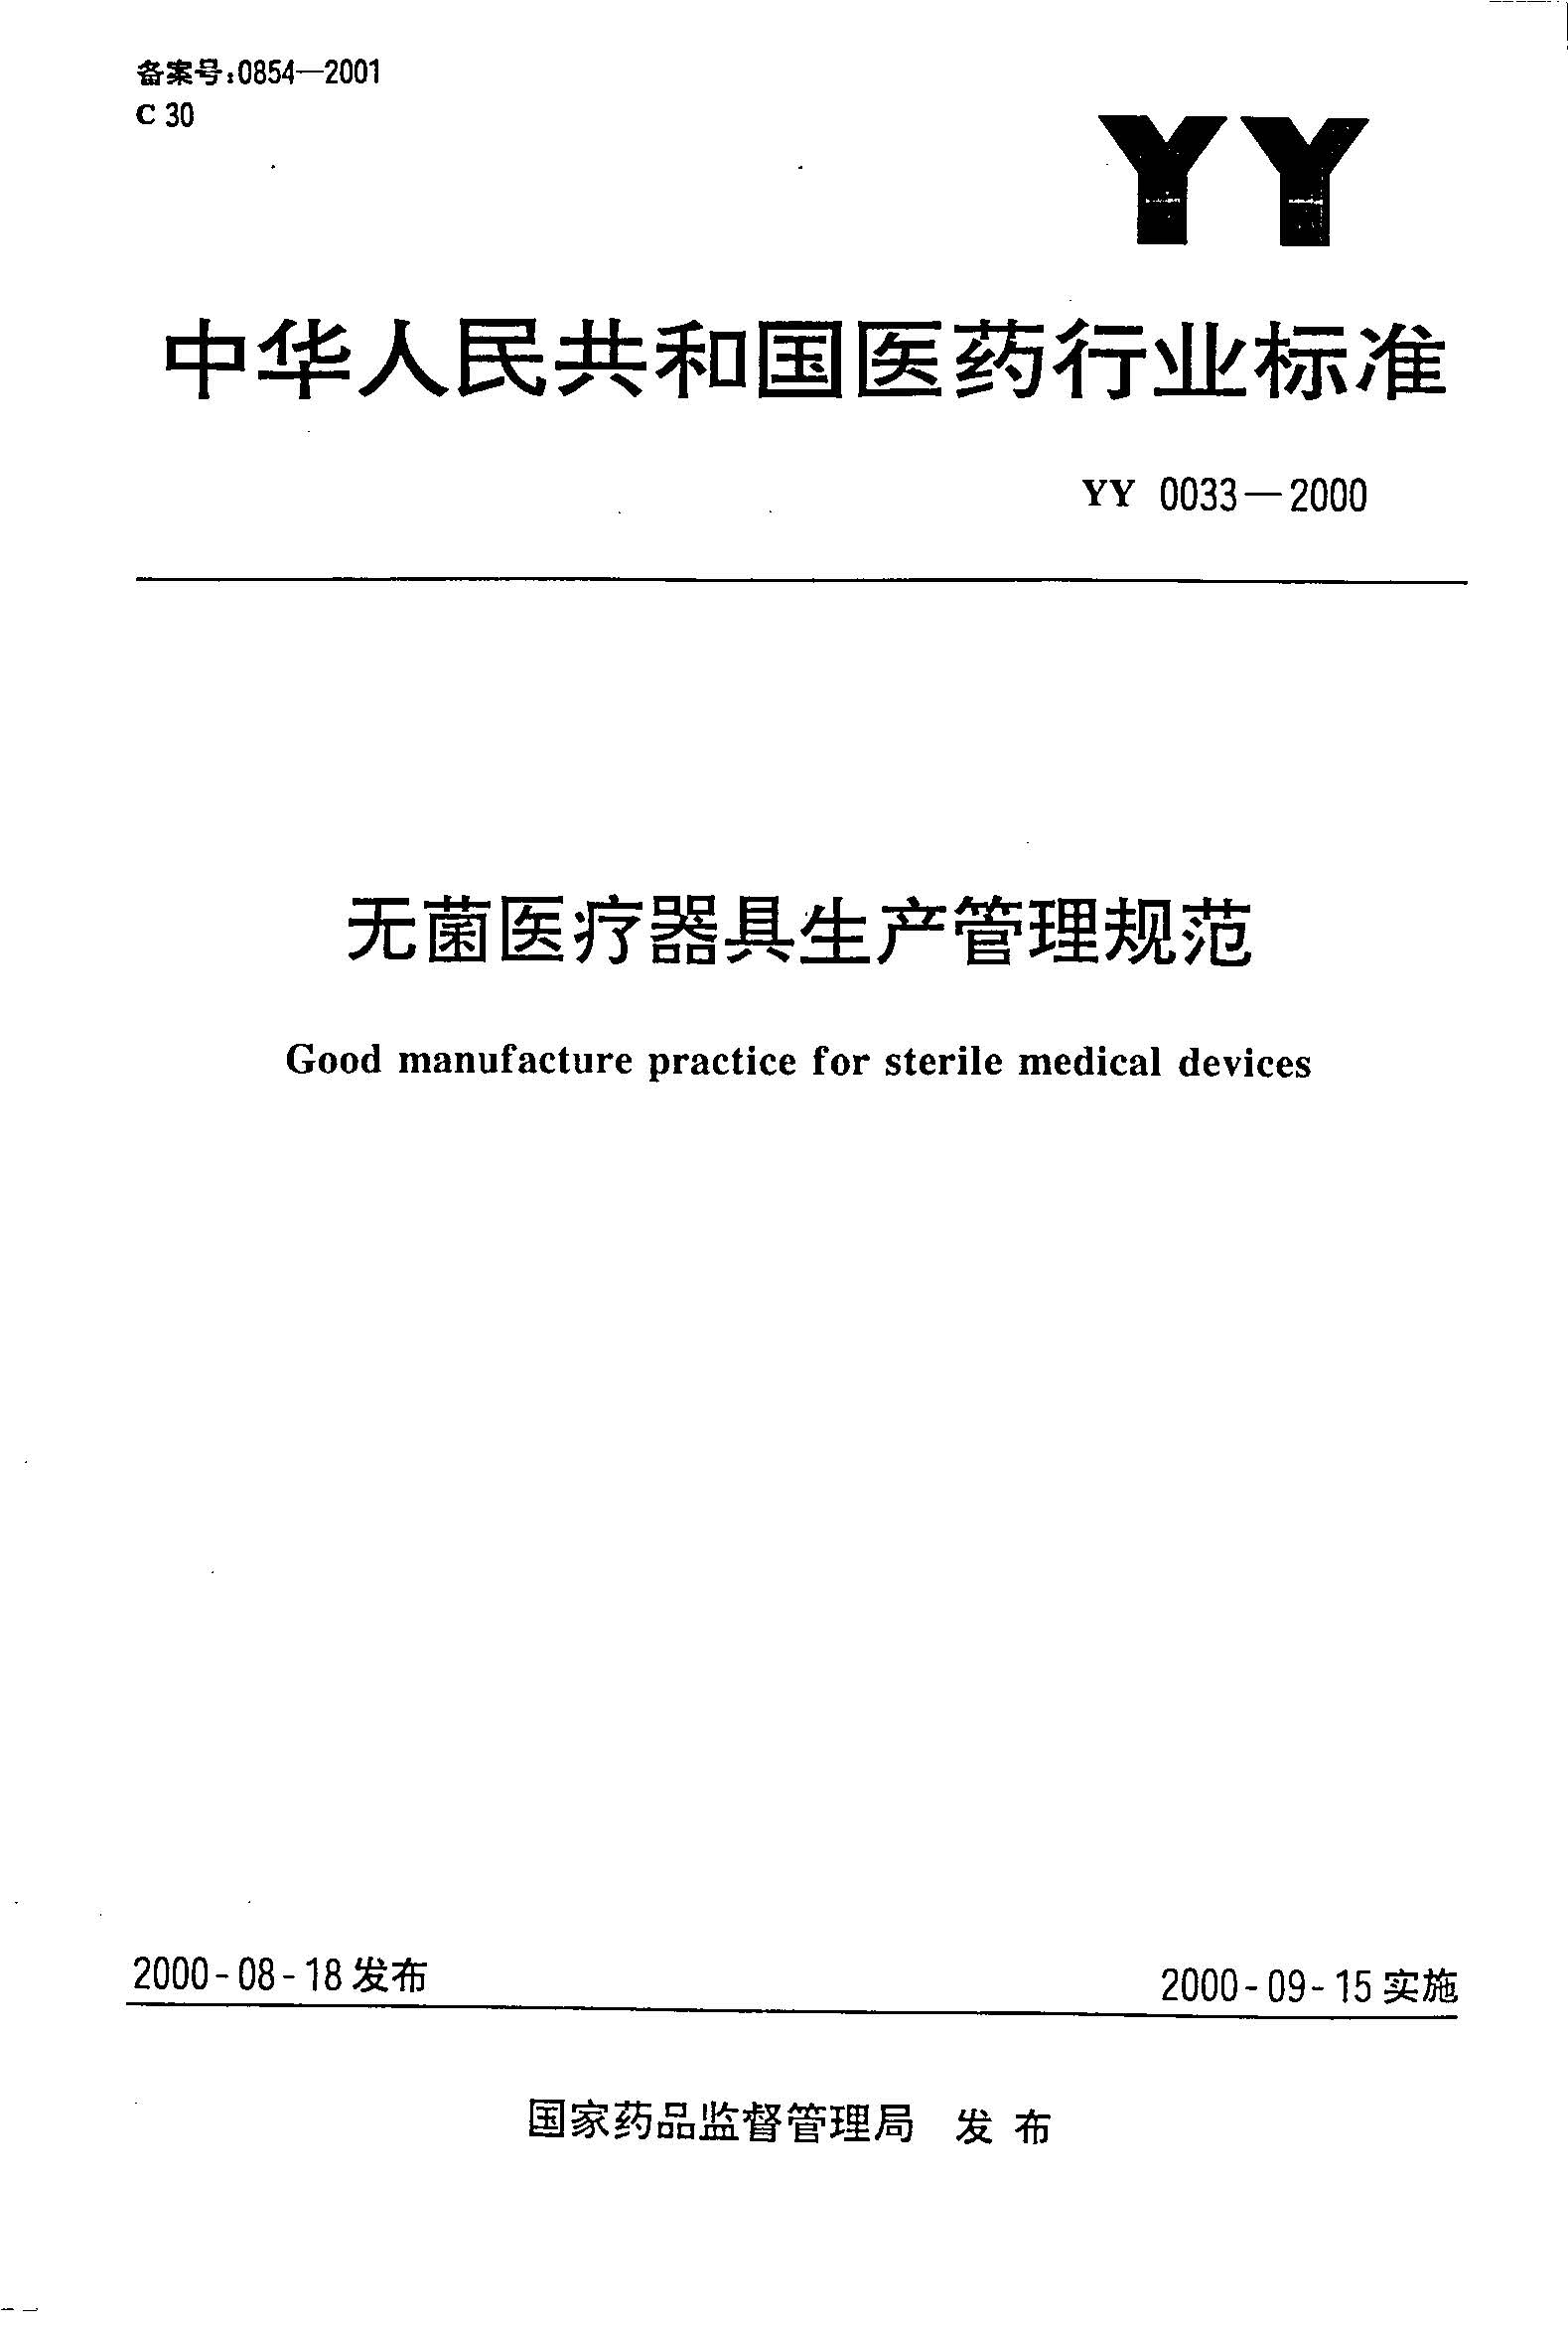 YY0033-2000无菌医疗器具生产管理规范.jpg